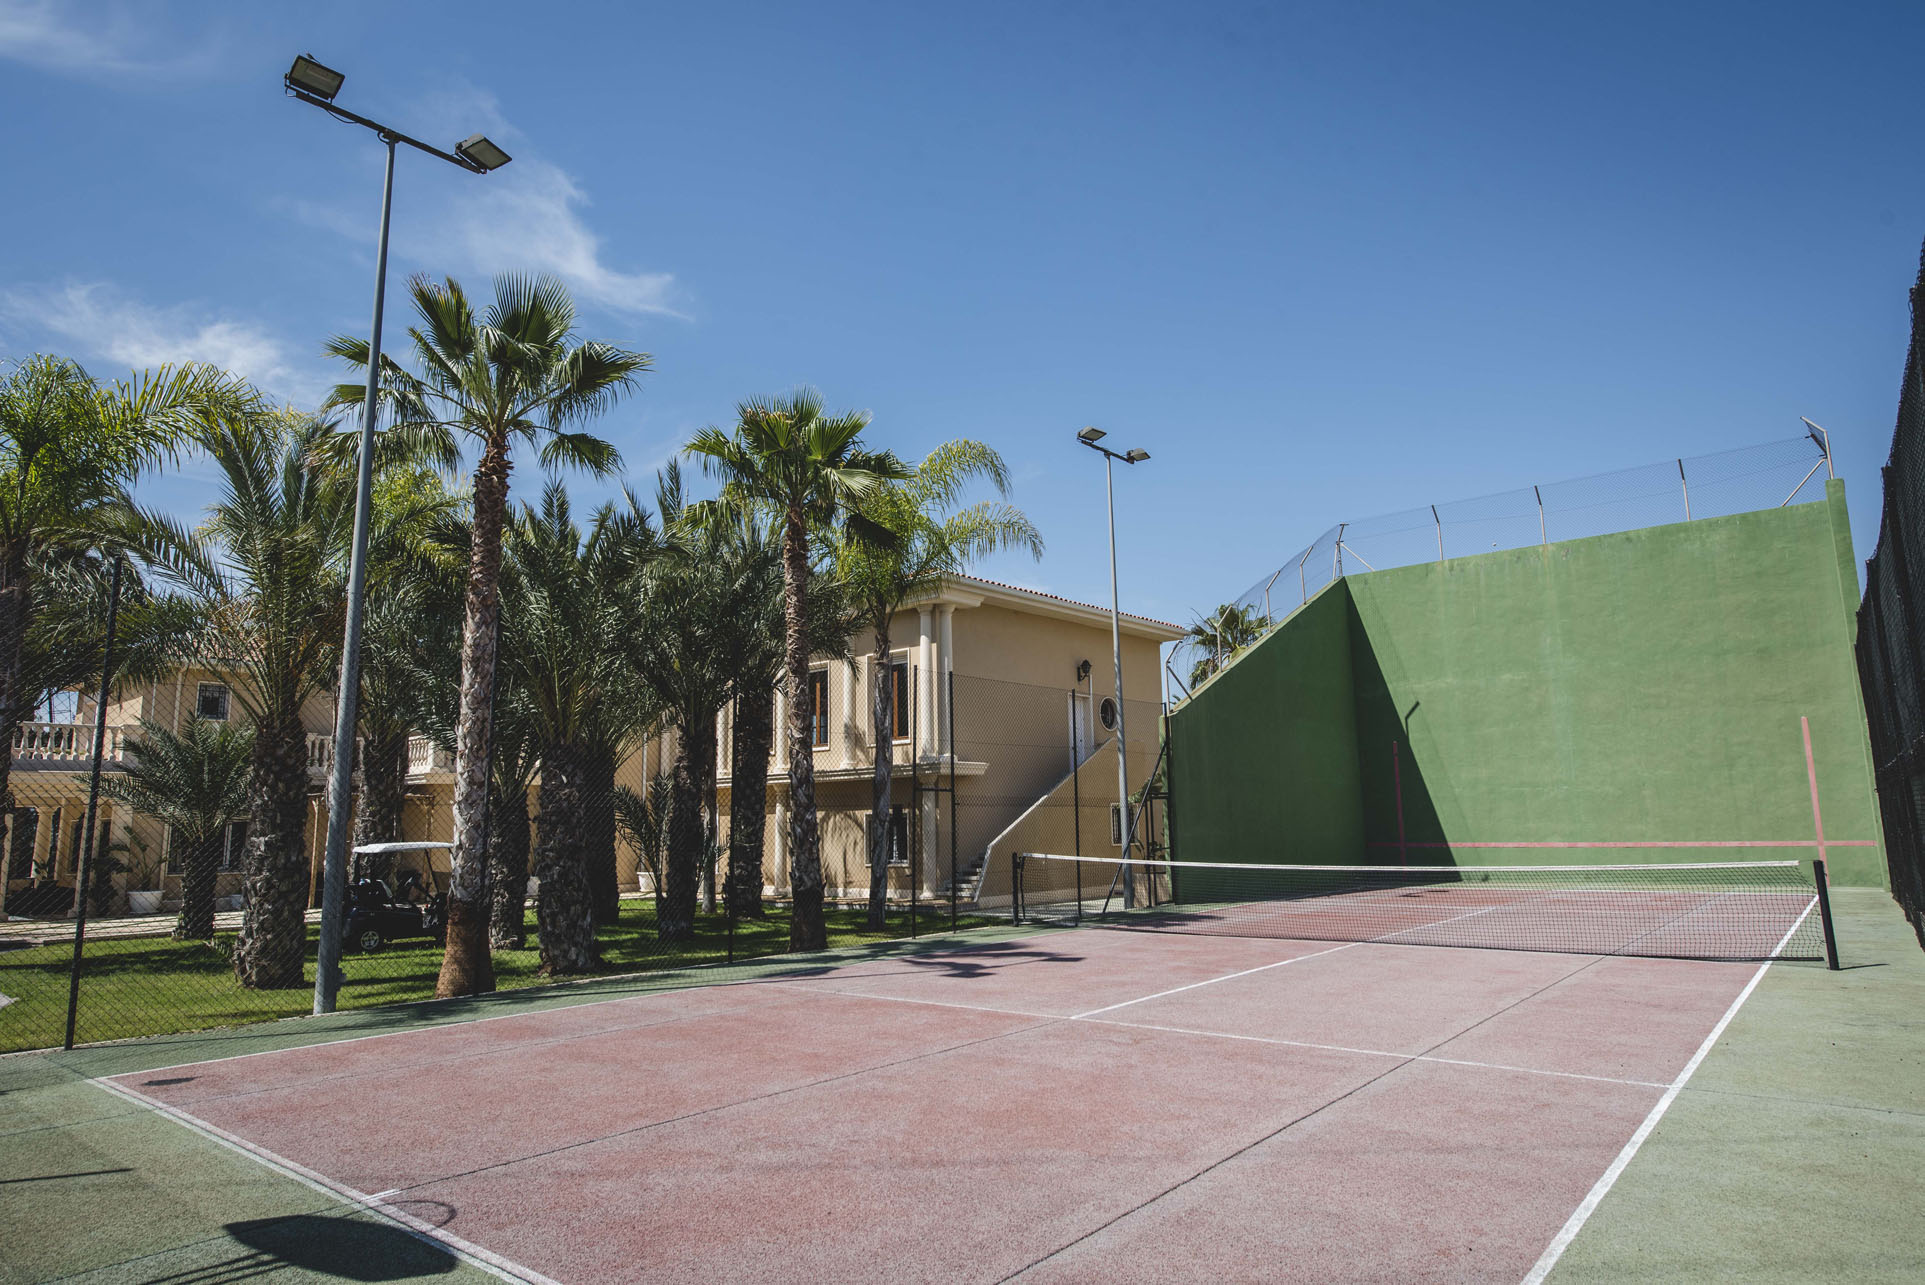 Tennis Court in Elche, Alicante